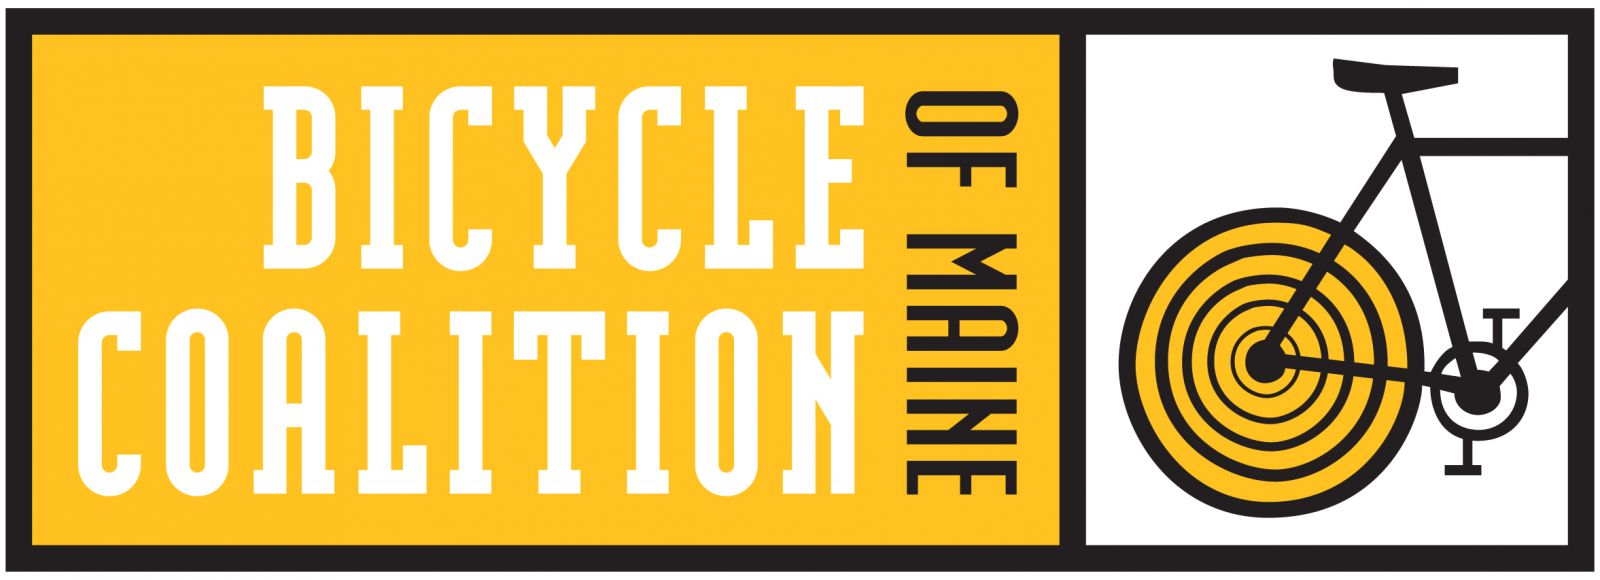 Bicycle Coalition of Maine Logo.jpg